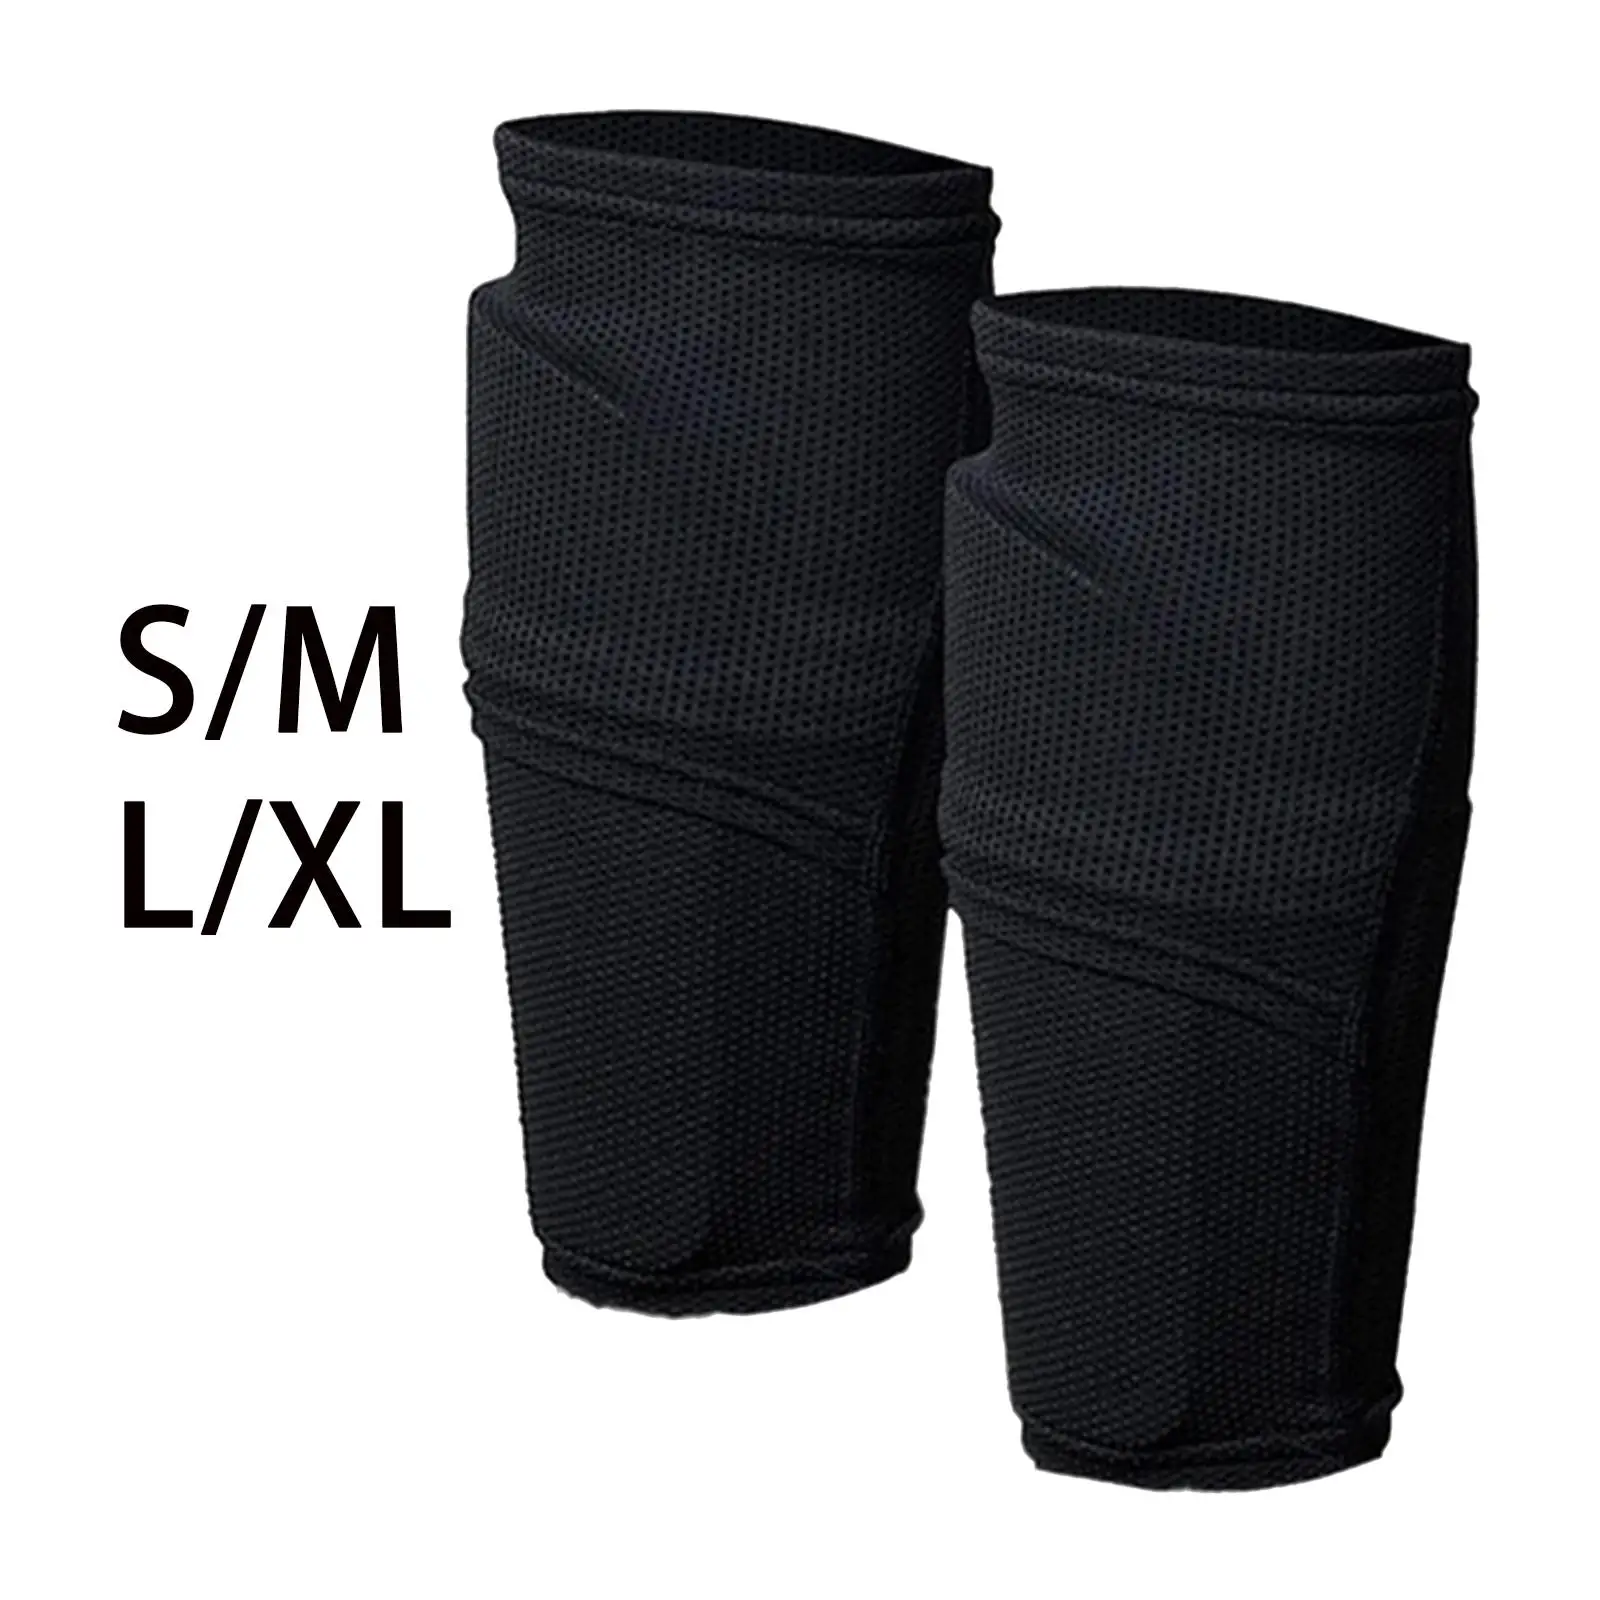 Shin Guard Sleeves Warm AntiSlip Support Protection Soccer Shin Guard Socks for Running Leisure Sports Kicking Ball Kids Women